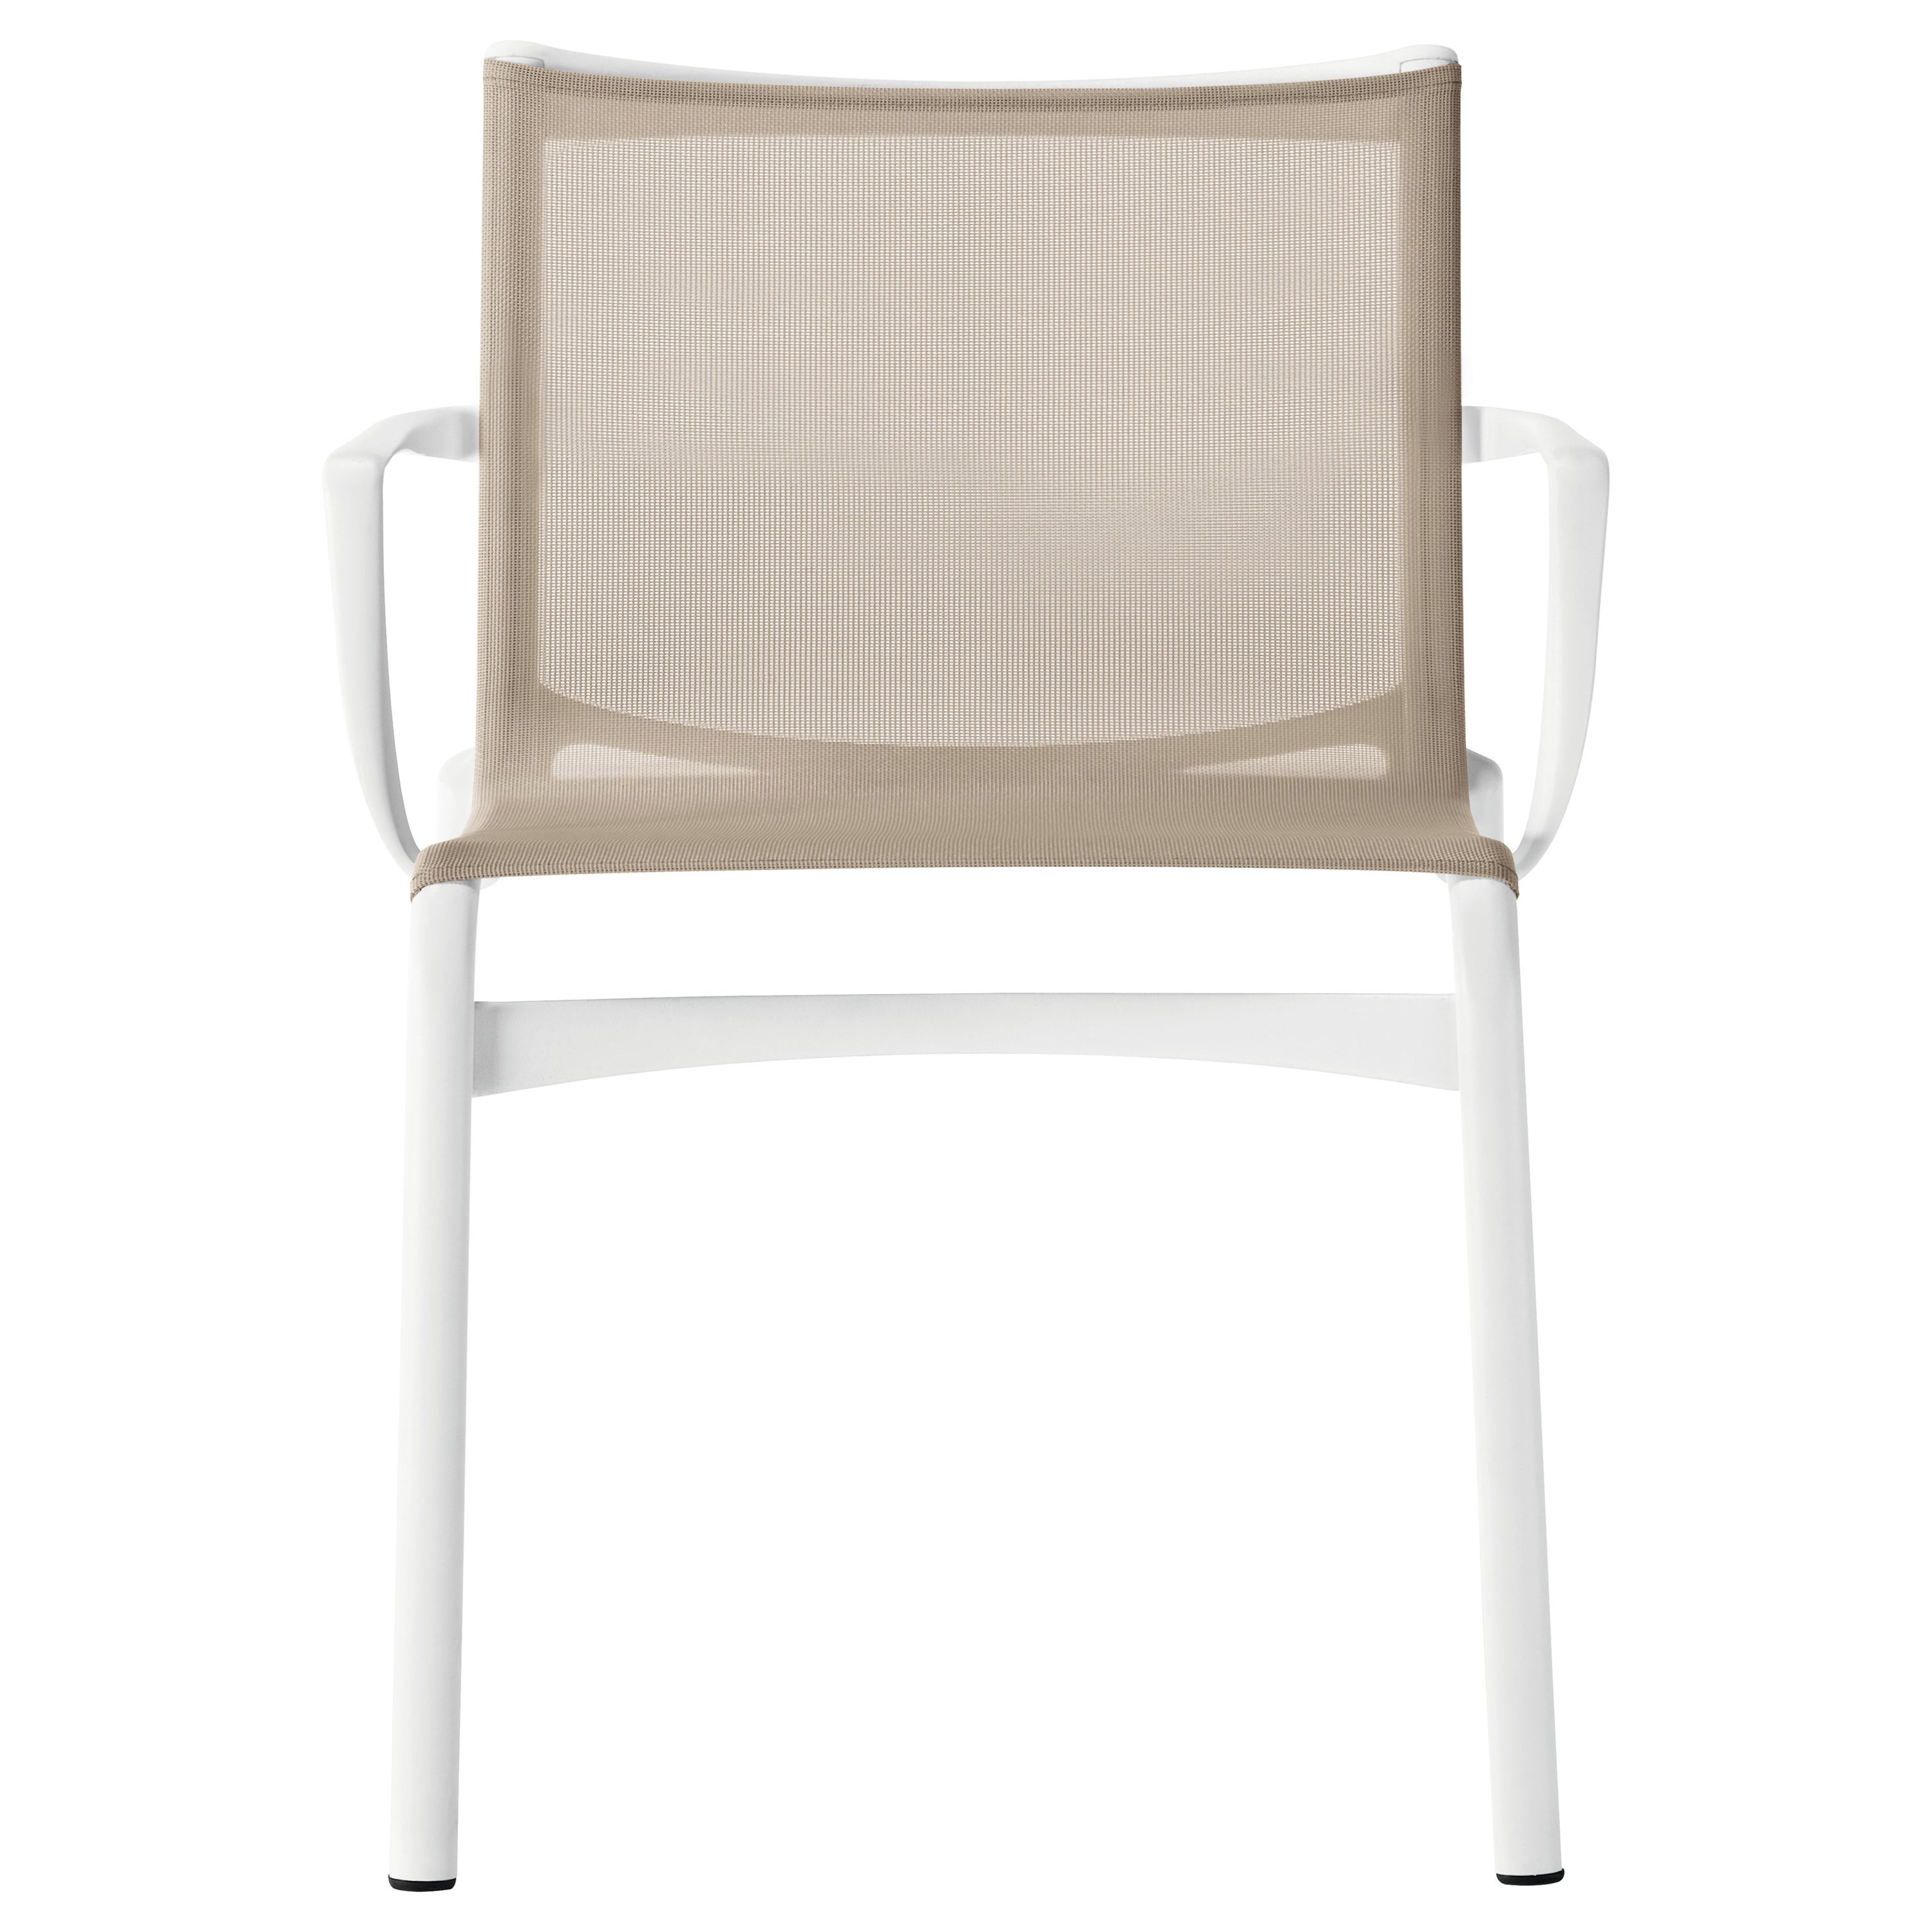 Alias Frame 52 Sessel aus Sandgeflecht mit weiß lackiertem Aluminiumrahmen